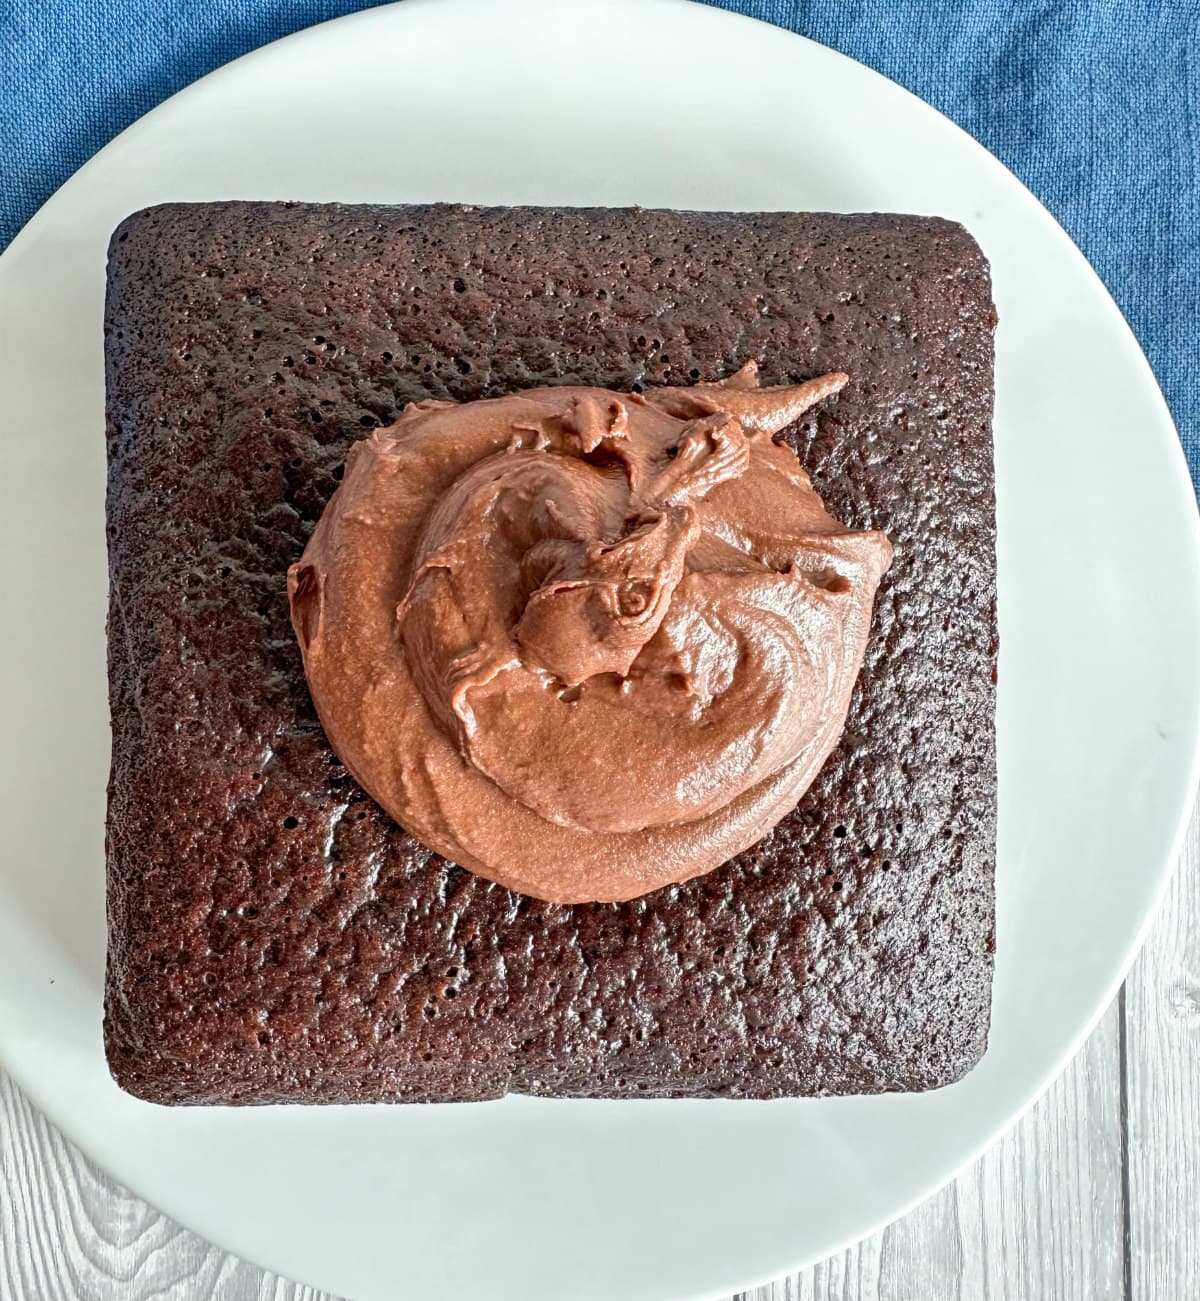 Basic chocolate icing on a wacky chocolate cake